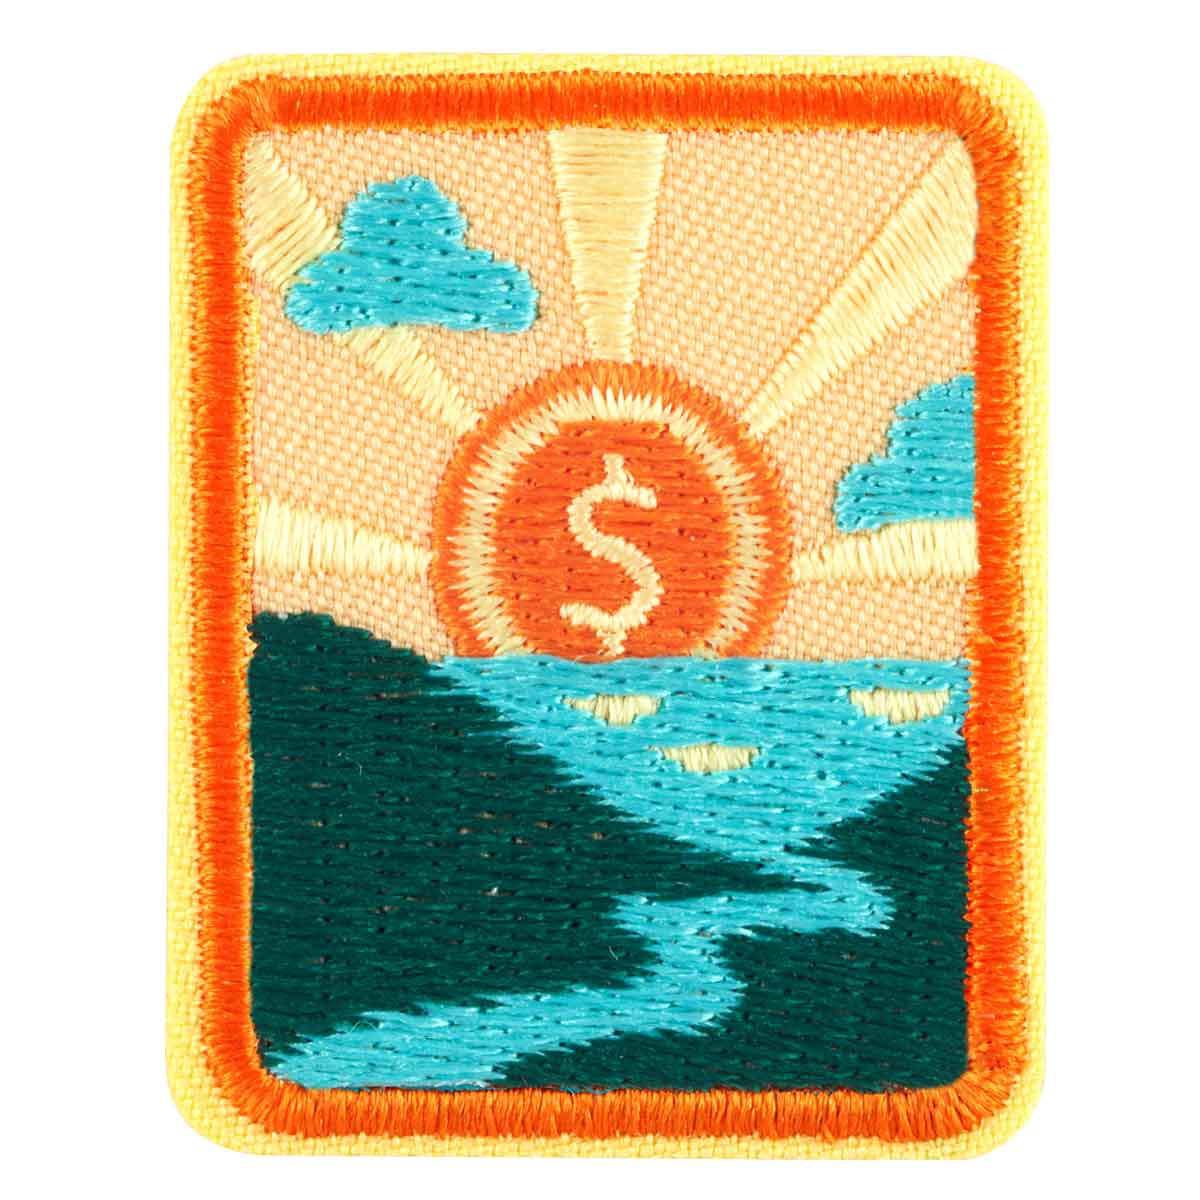 My Financial Power Badge